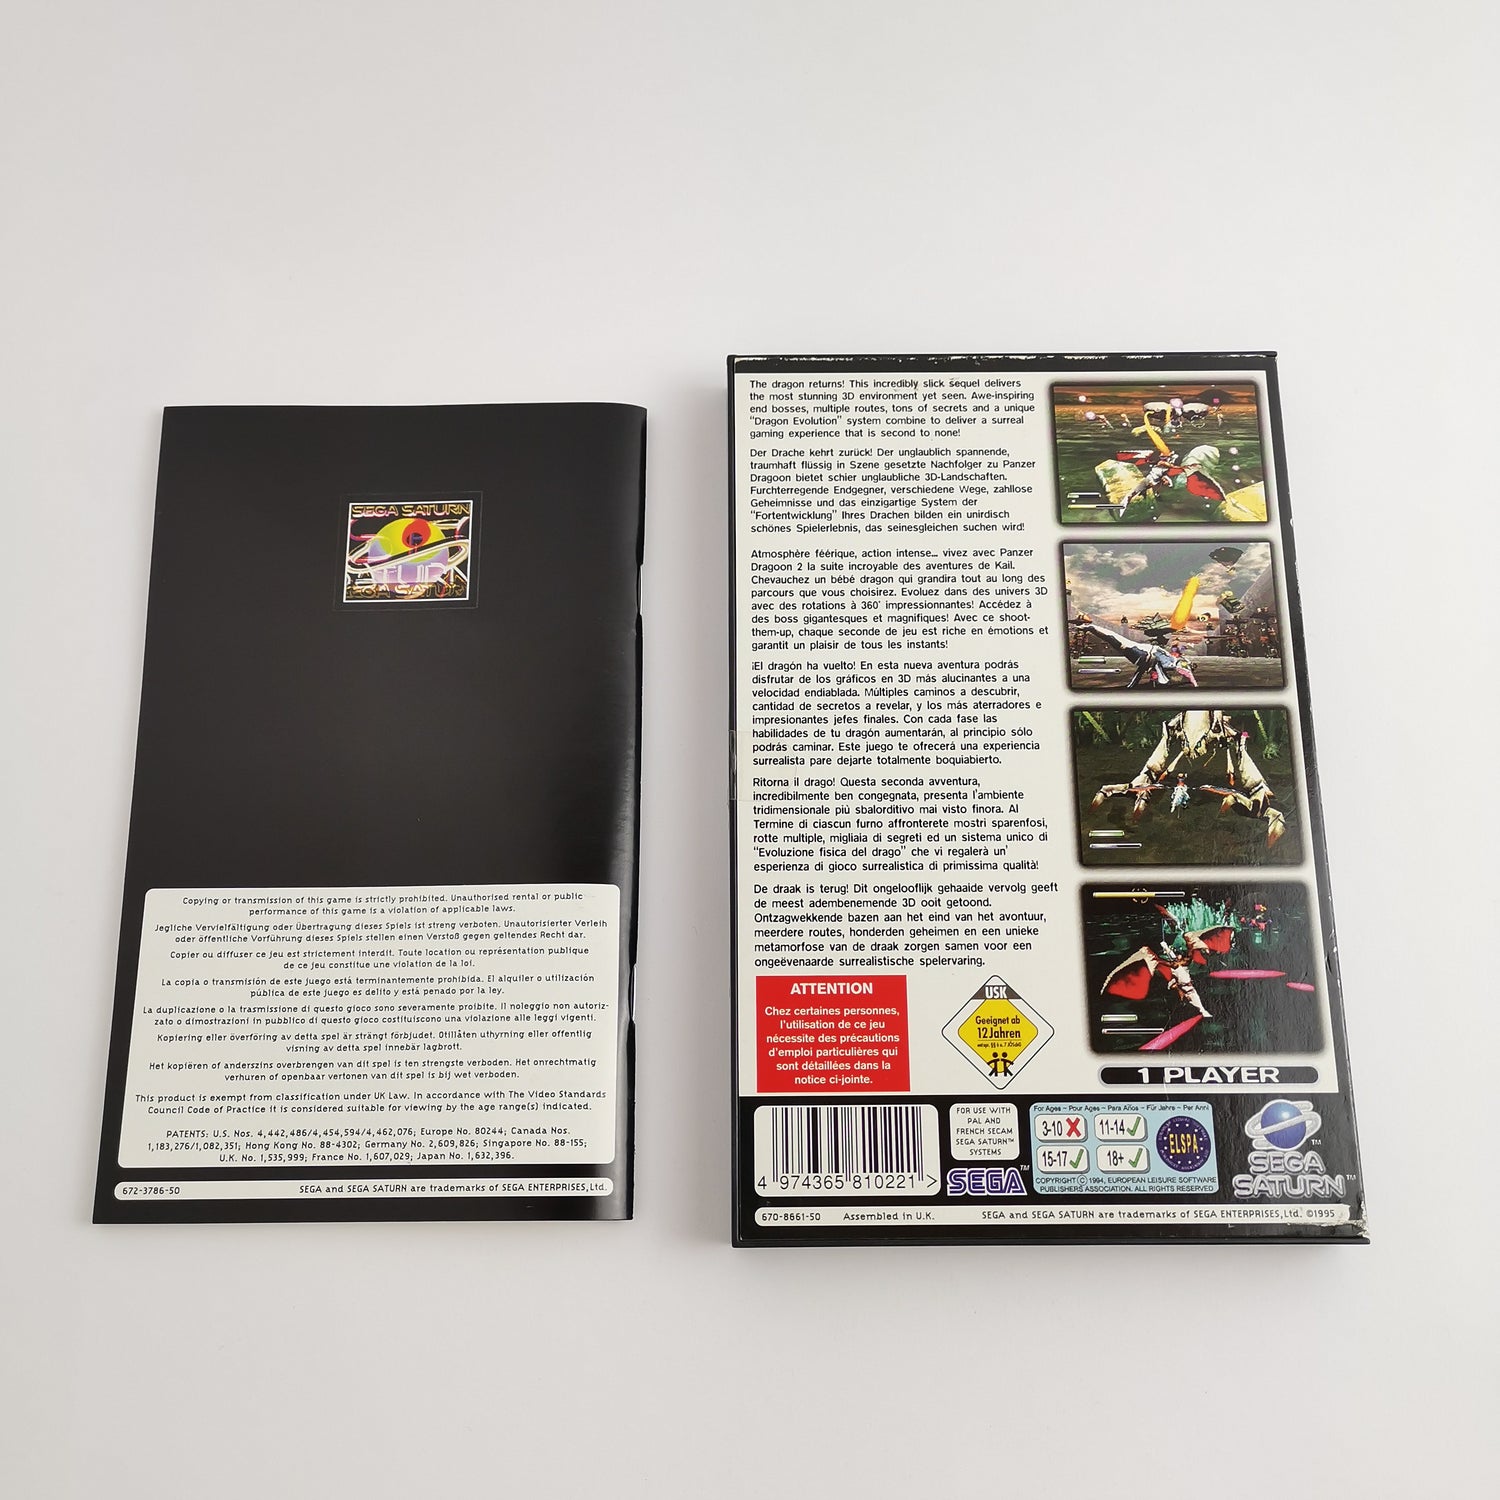 Sega Saturn game: Panzer Dragoon Zwei II 2 - original packaging & instructions | PAL version